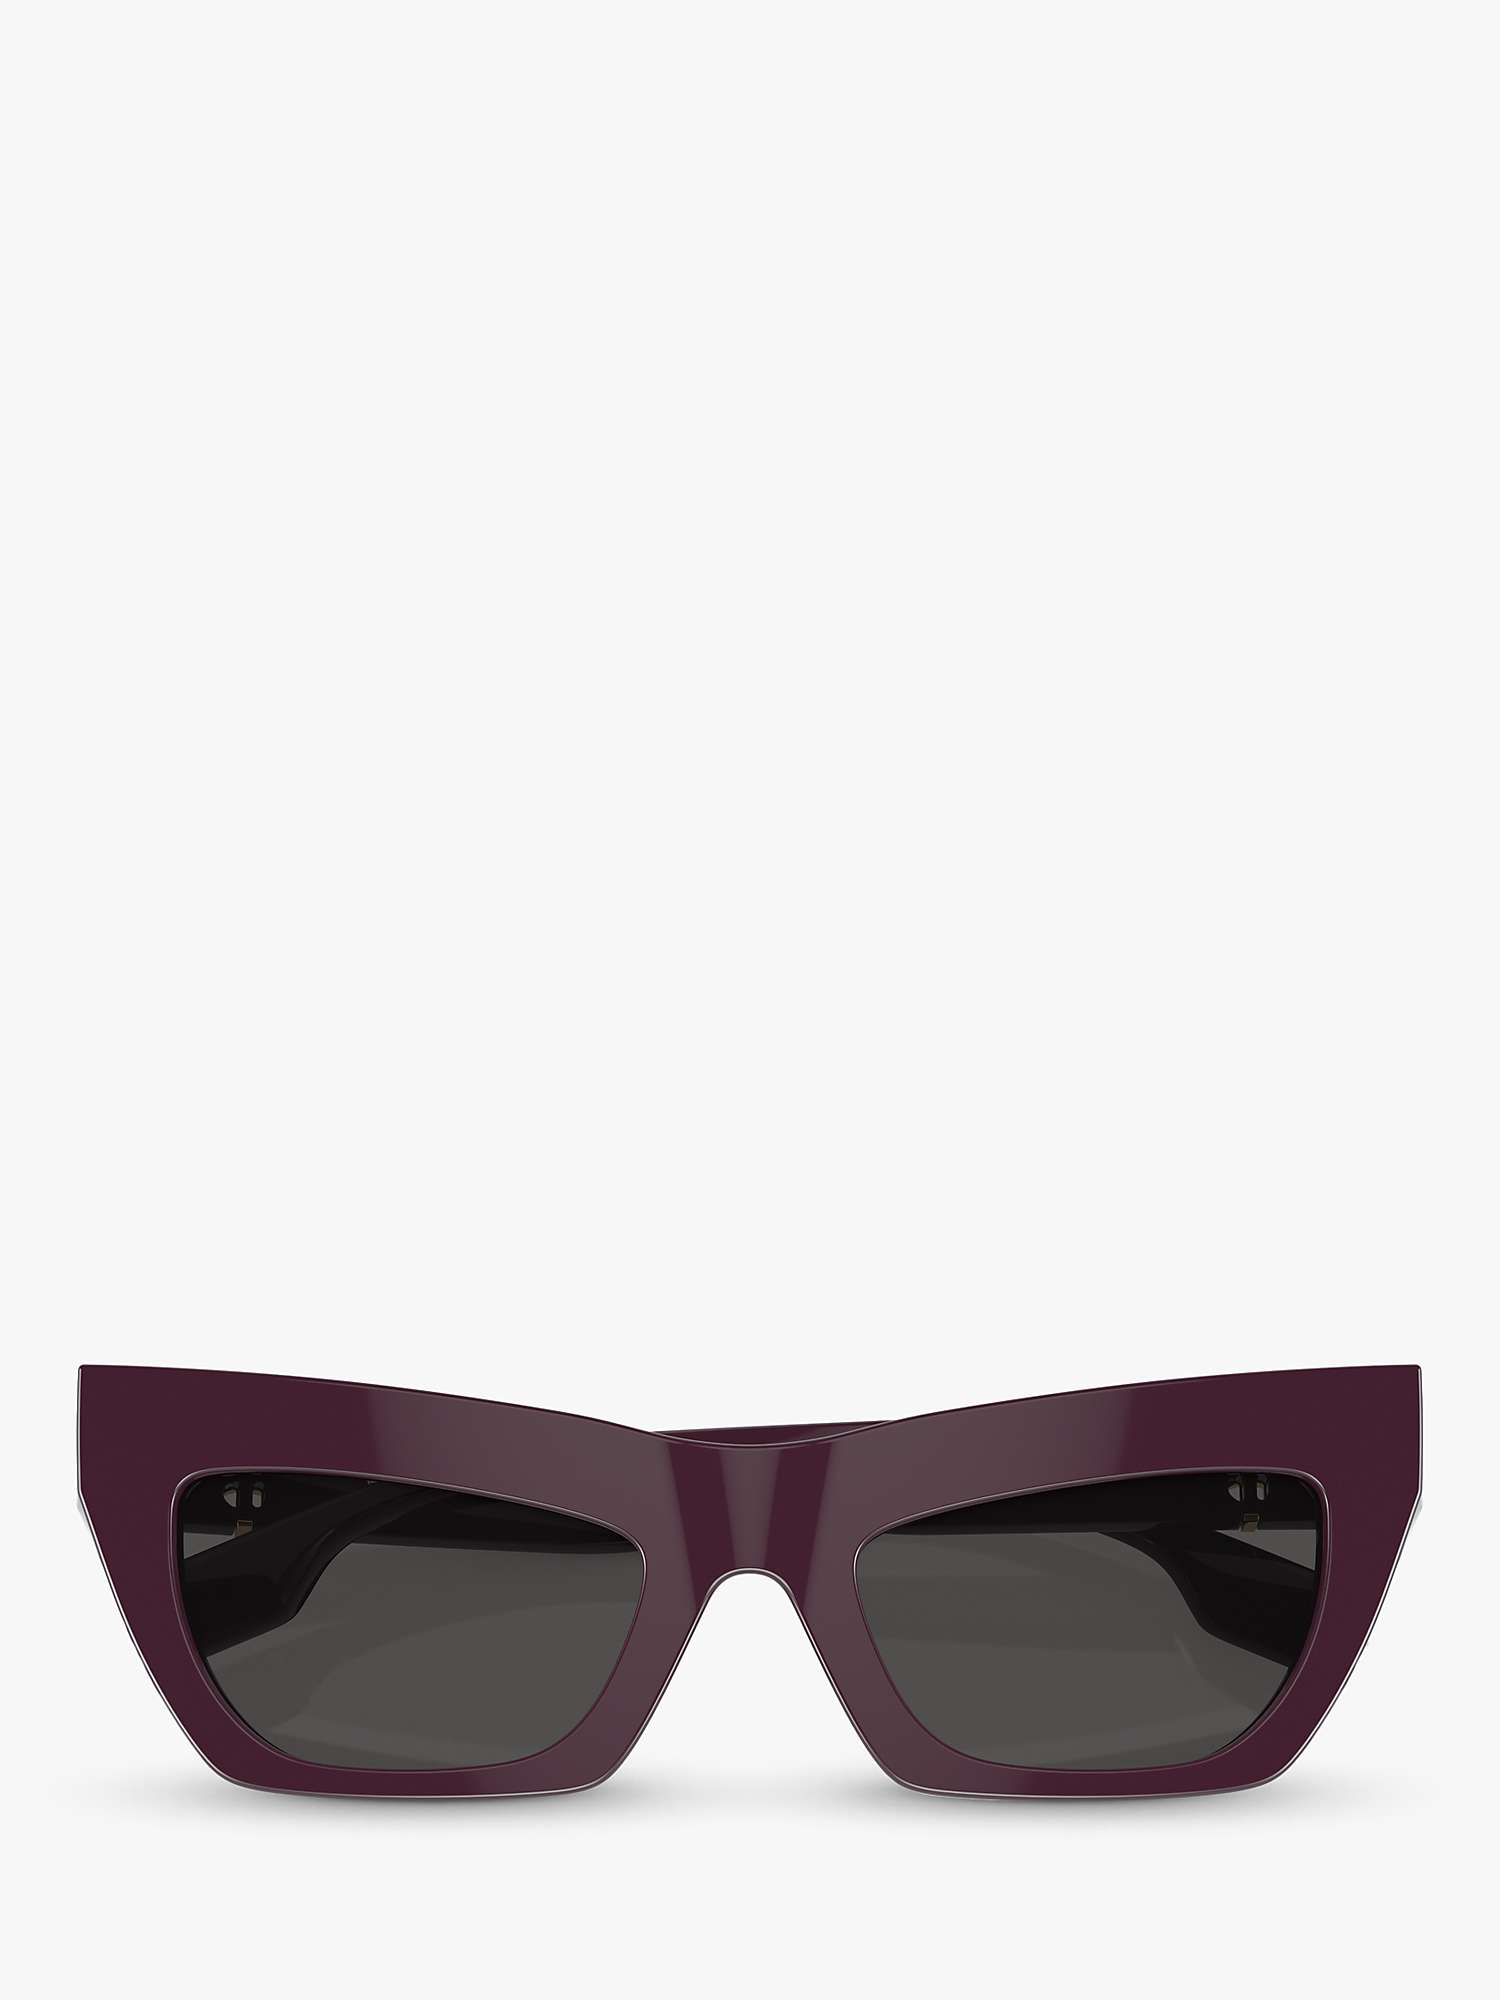 Buy Burberry BE4405 Women's Cat's Eye Sunglasses, Bordeaux/Grey Online at johnlewis.com